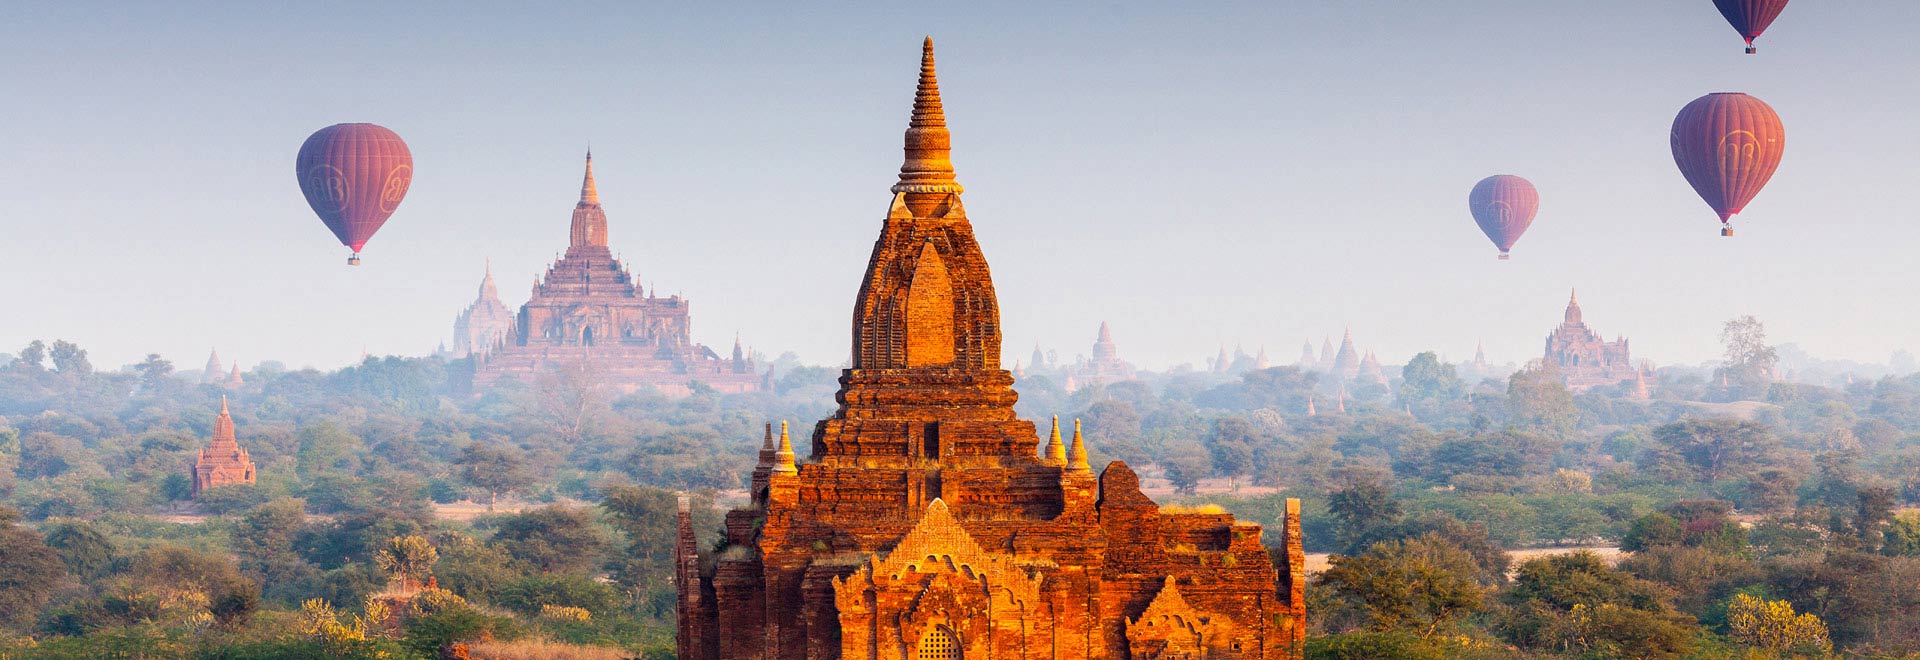 Asia Myanmar Bagan Temples Hot Air Balloons